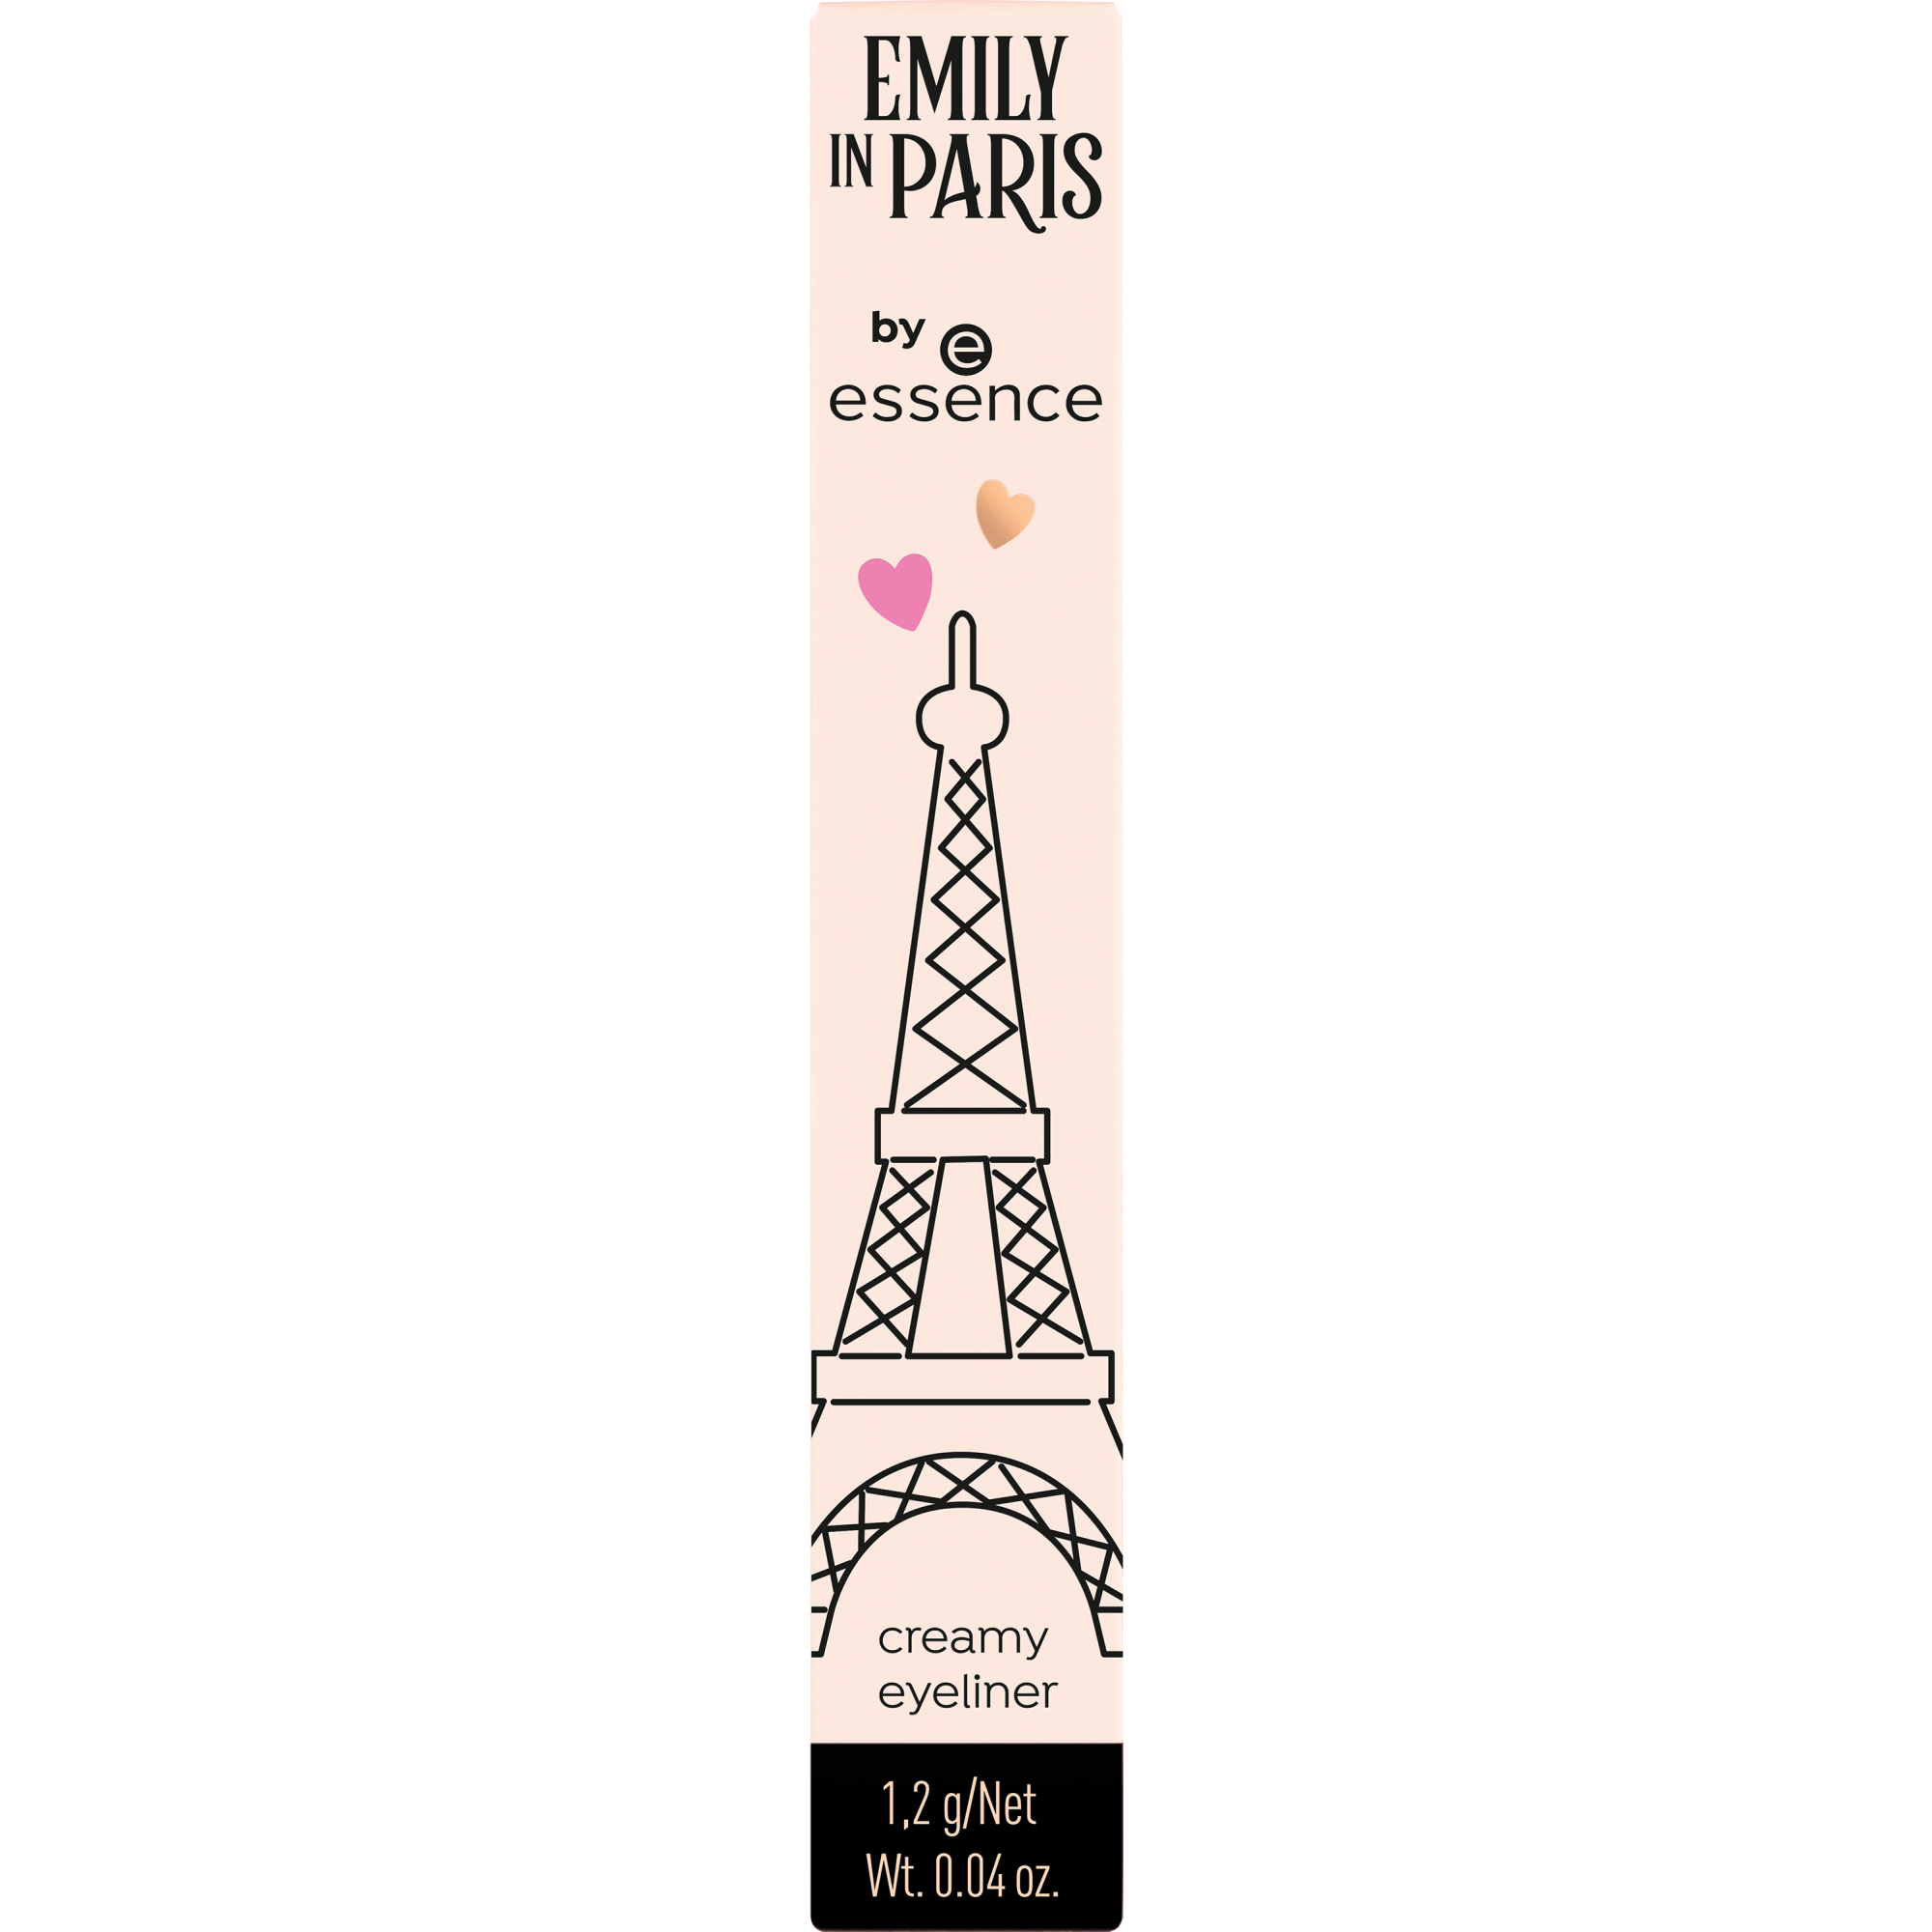 essence EMILY IN PARIS by essence creamy eyeliner